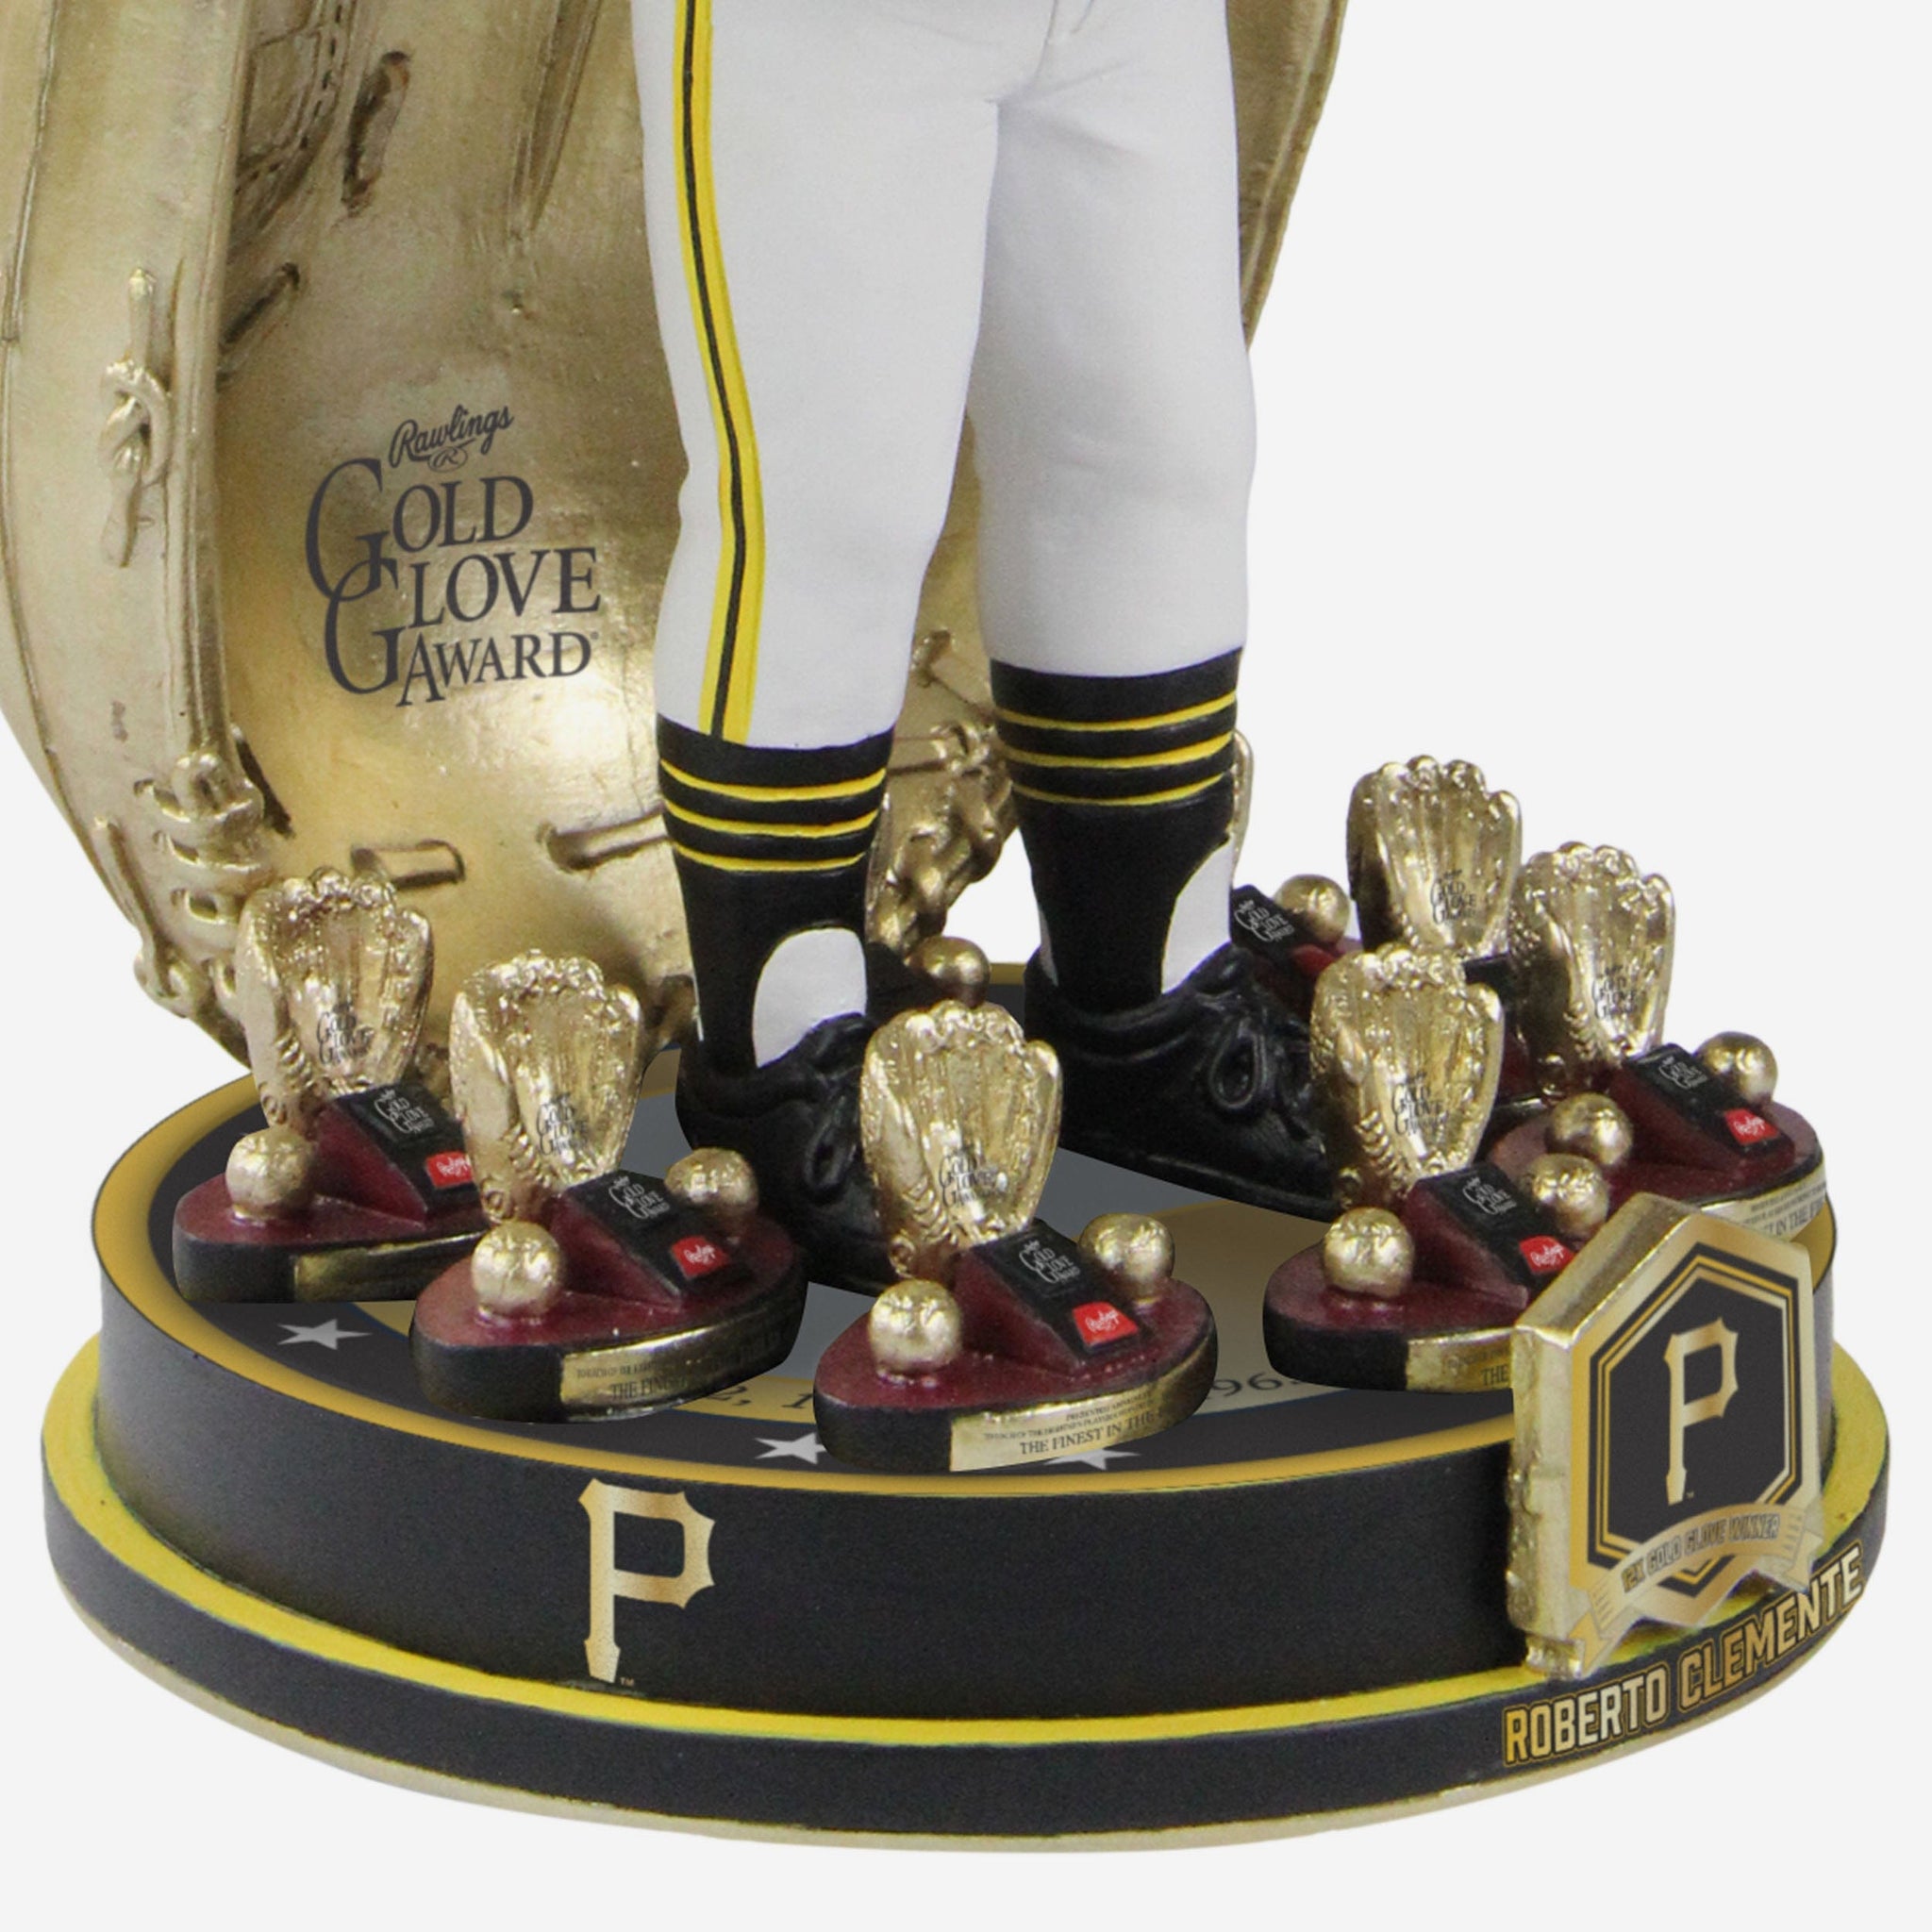 MLB Pittsburgh Pirates City Connect (Roberto Clemente) Women's Replica  Baseball Jersey.